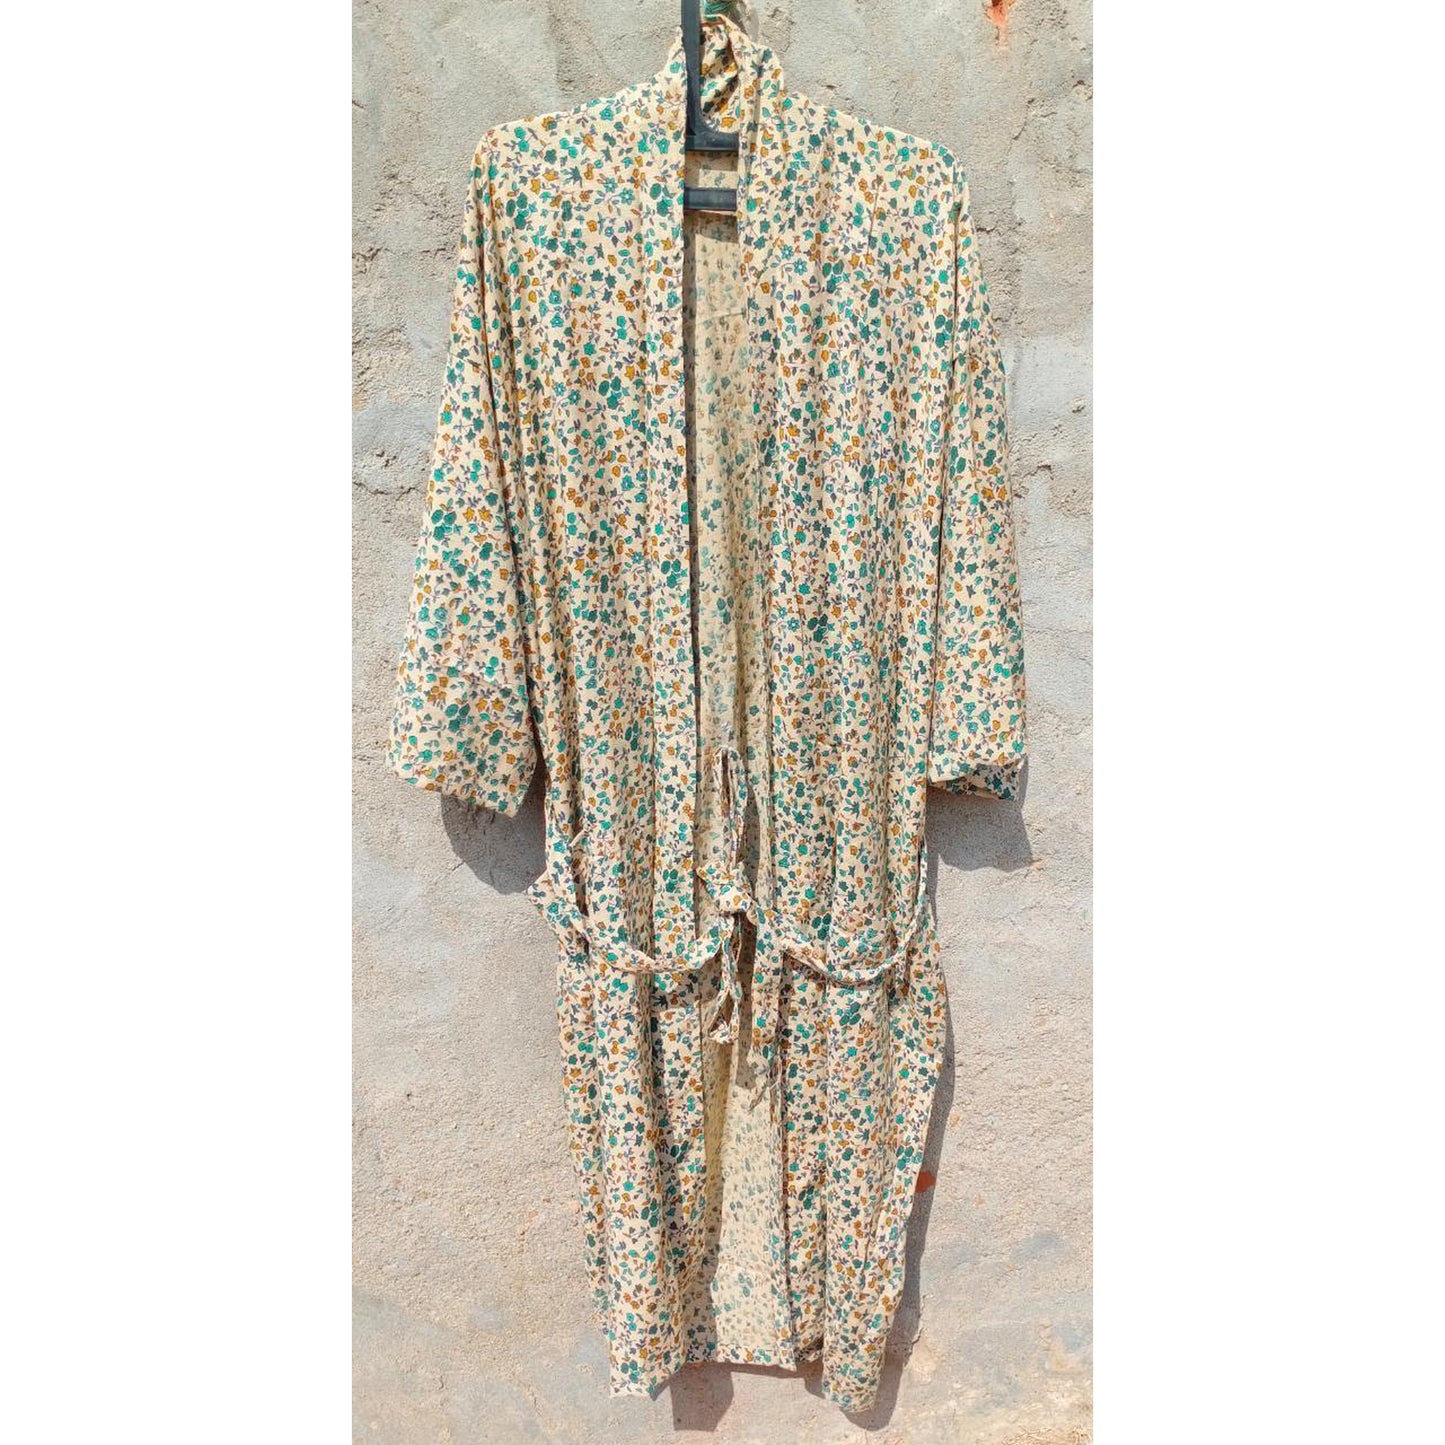 Kimono Bath Robes/ Night Suit rayon green - The Teal Thread